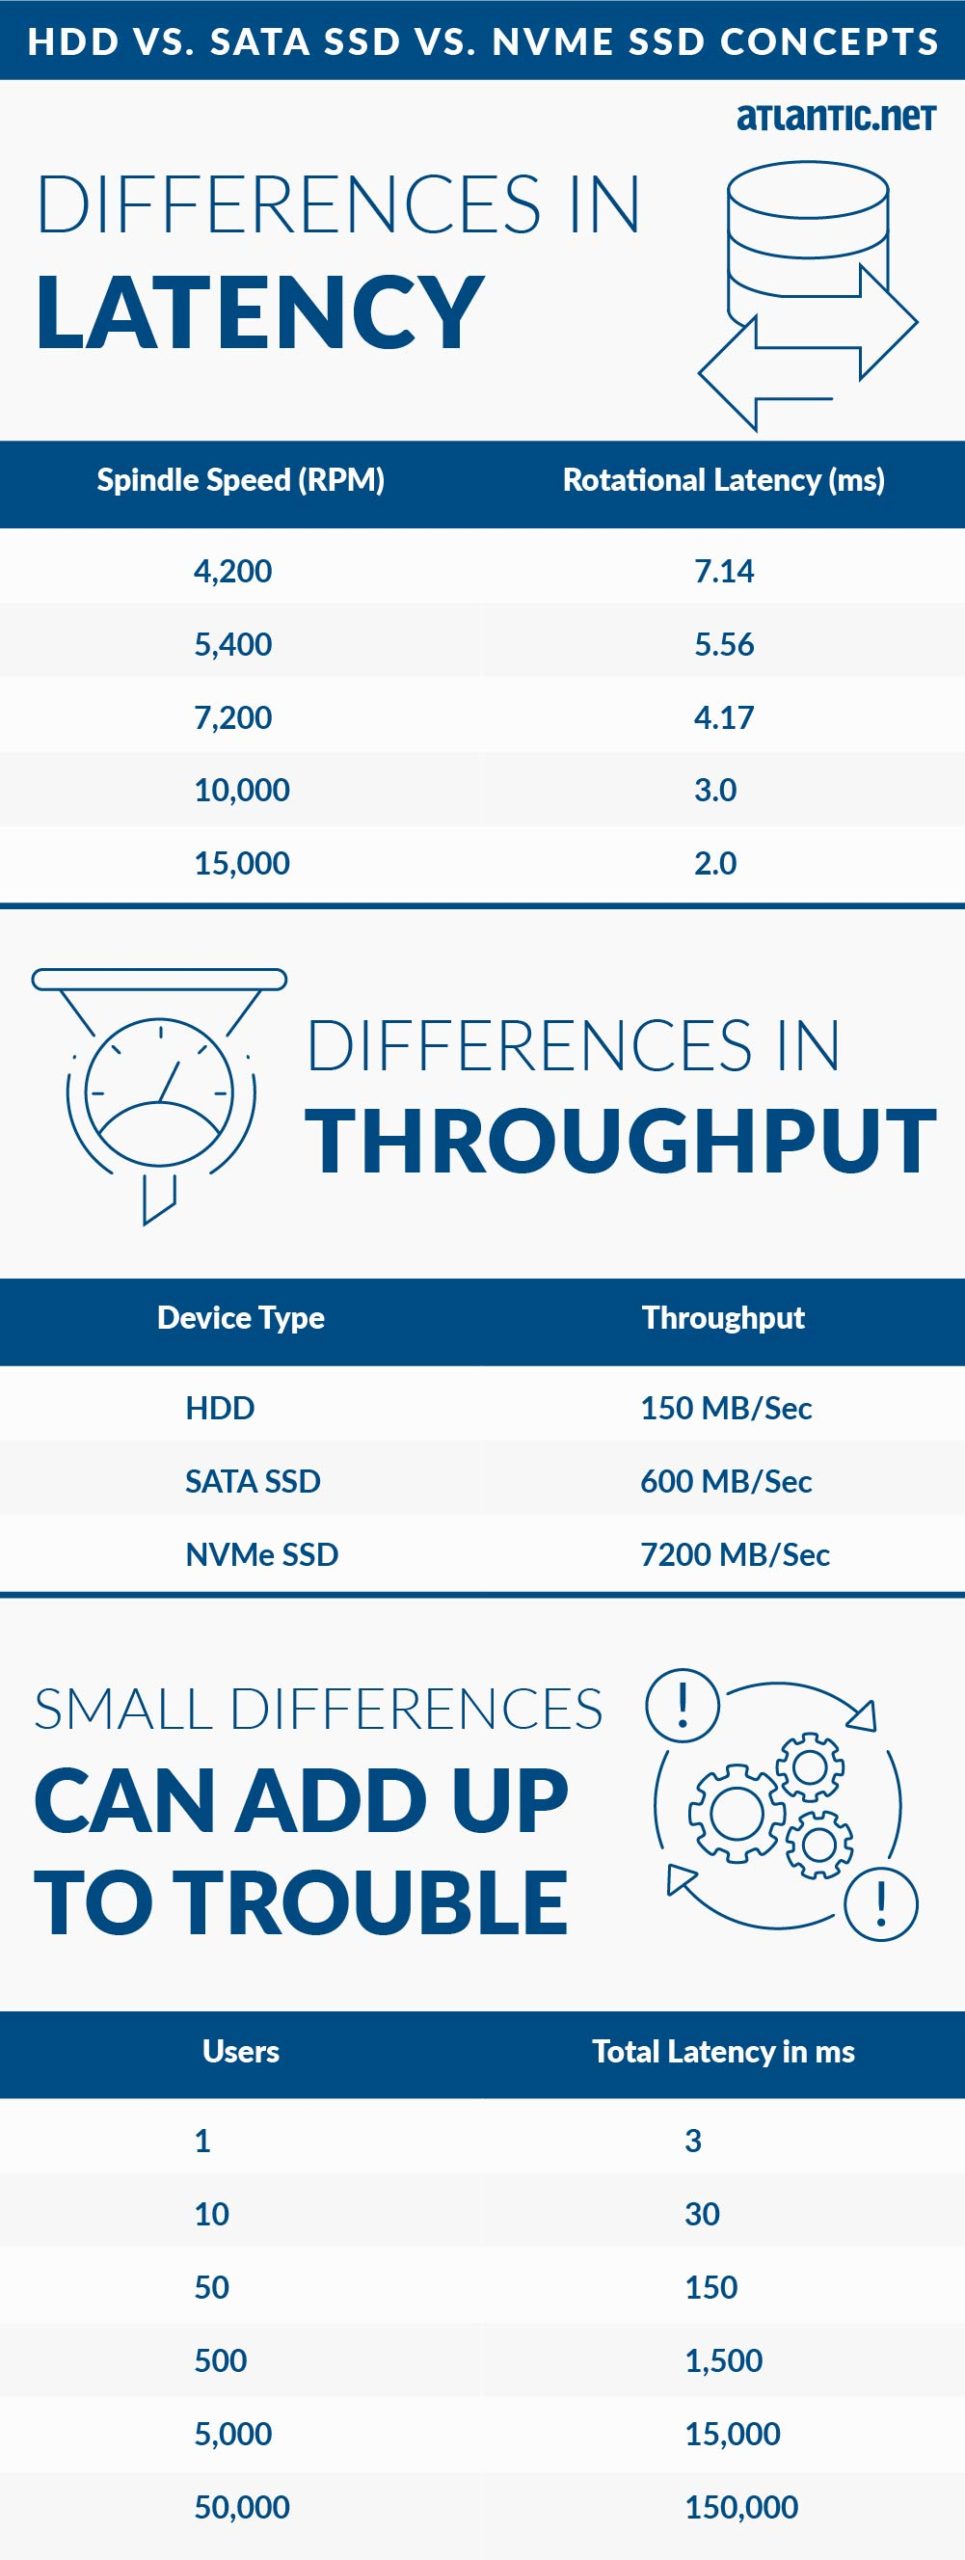 HDD vs SATA SSD vs NVMe SSD Concepts